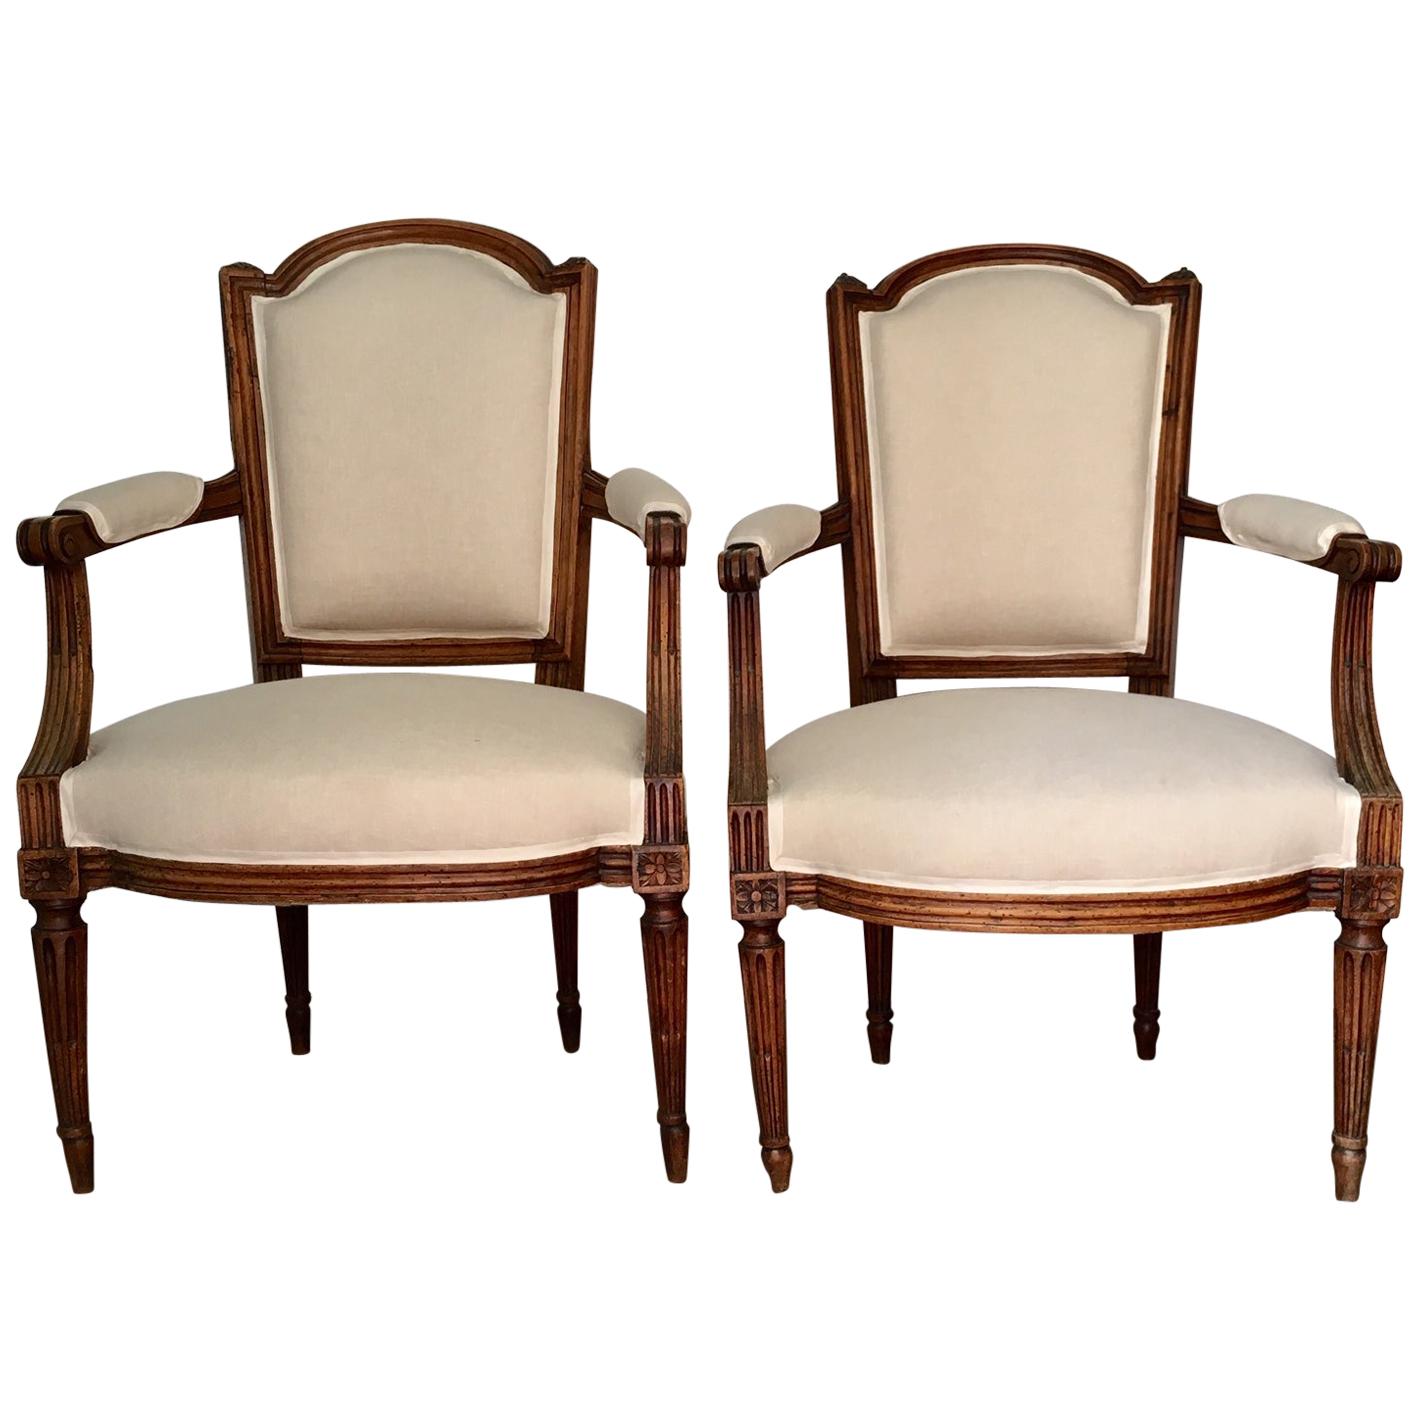 Paar französische Louis-XVI-Fauteuils oder Sessel aus dem 18. Jahrhundert